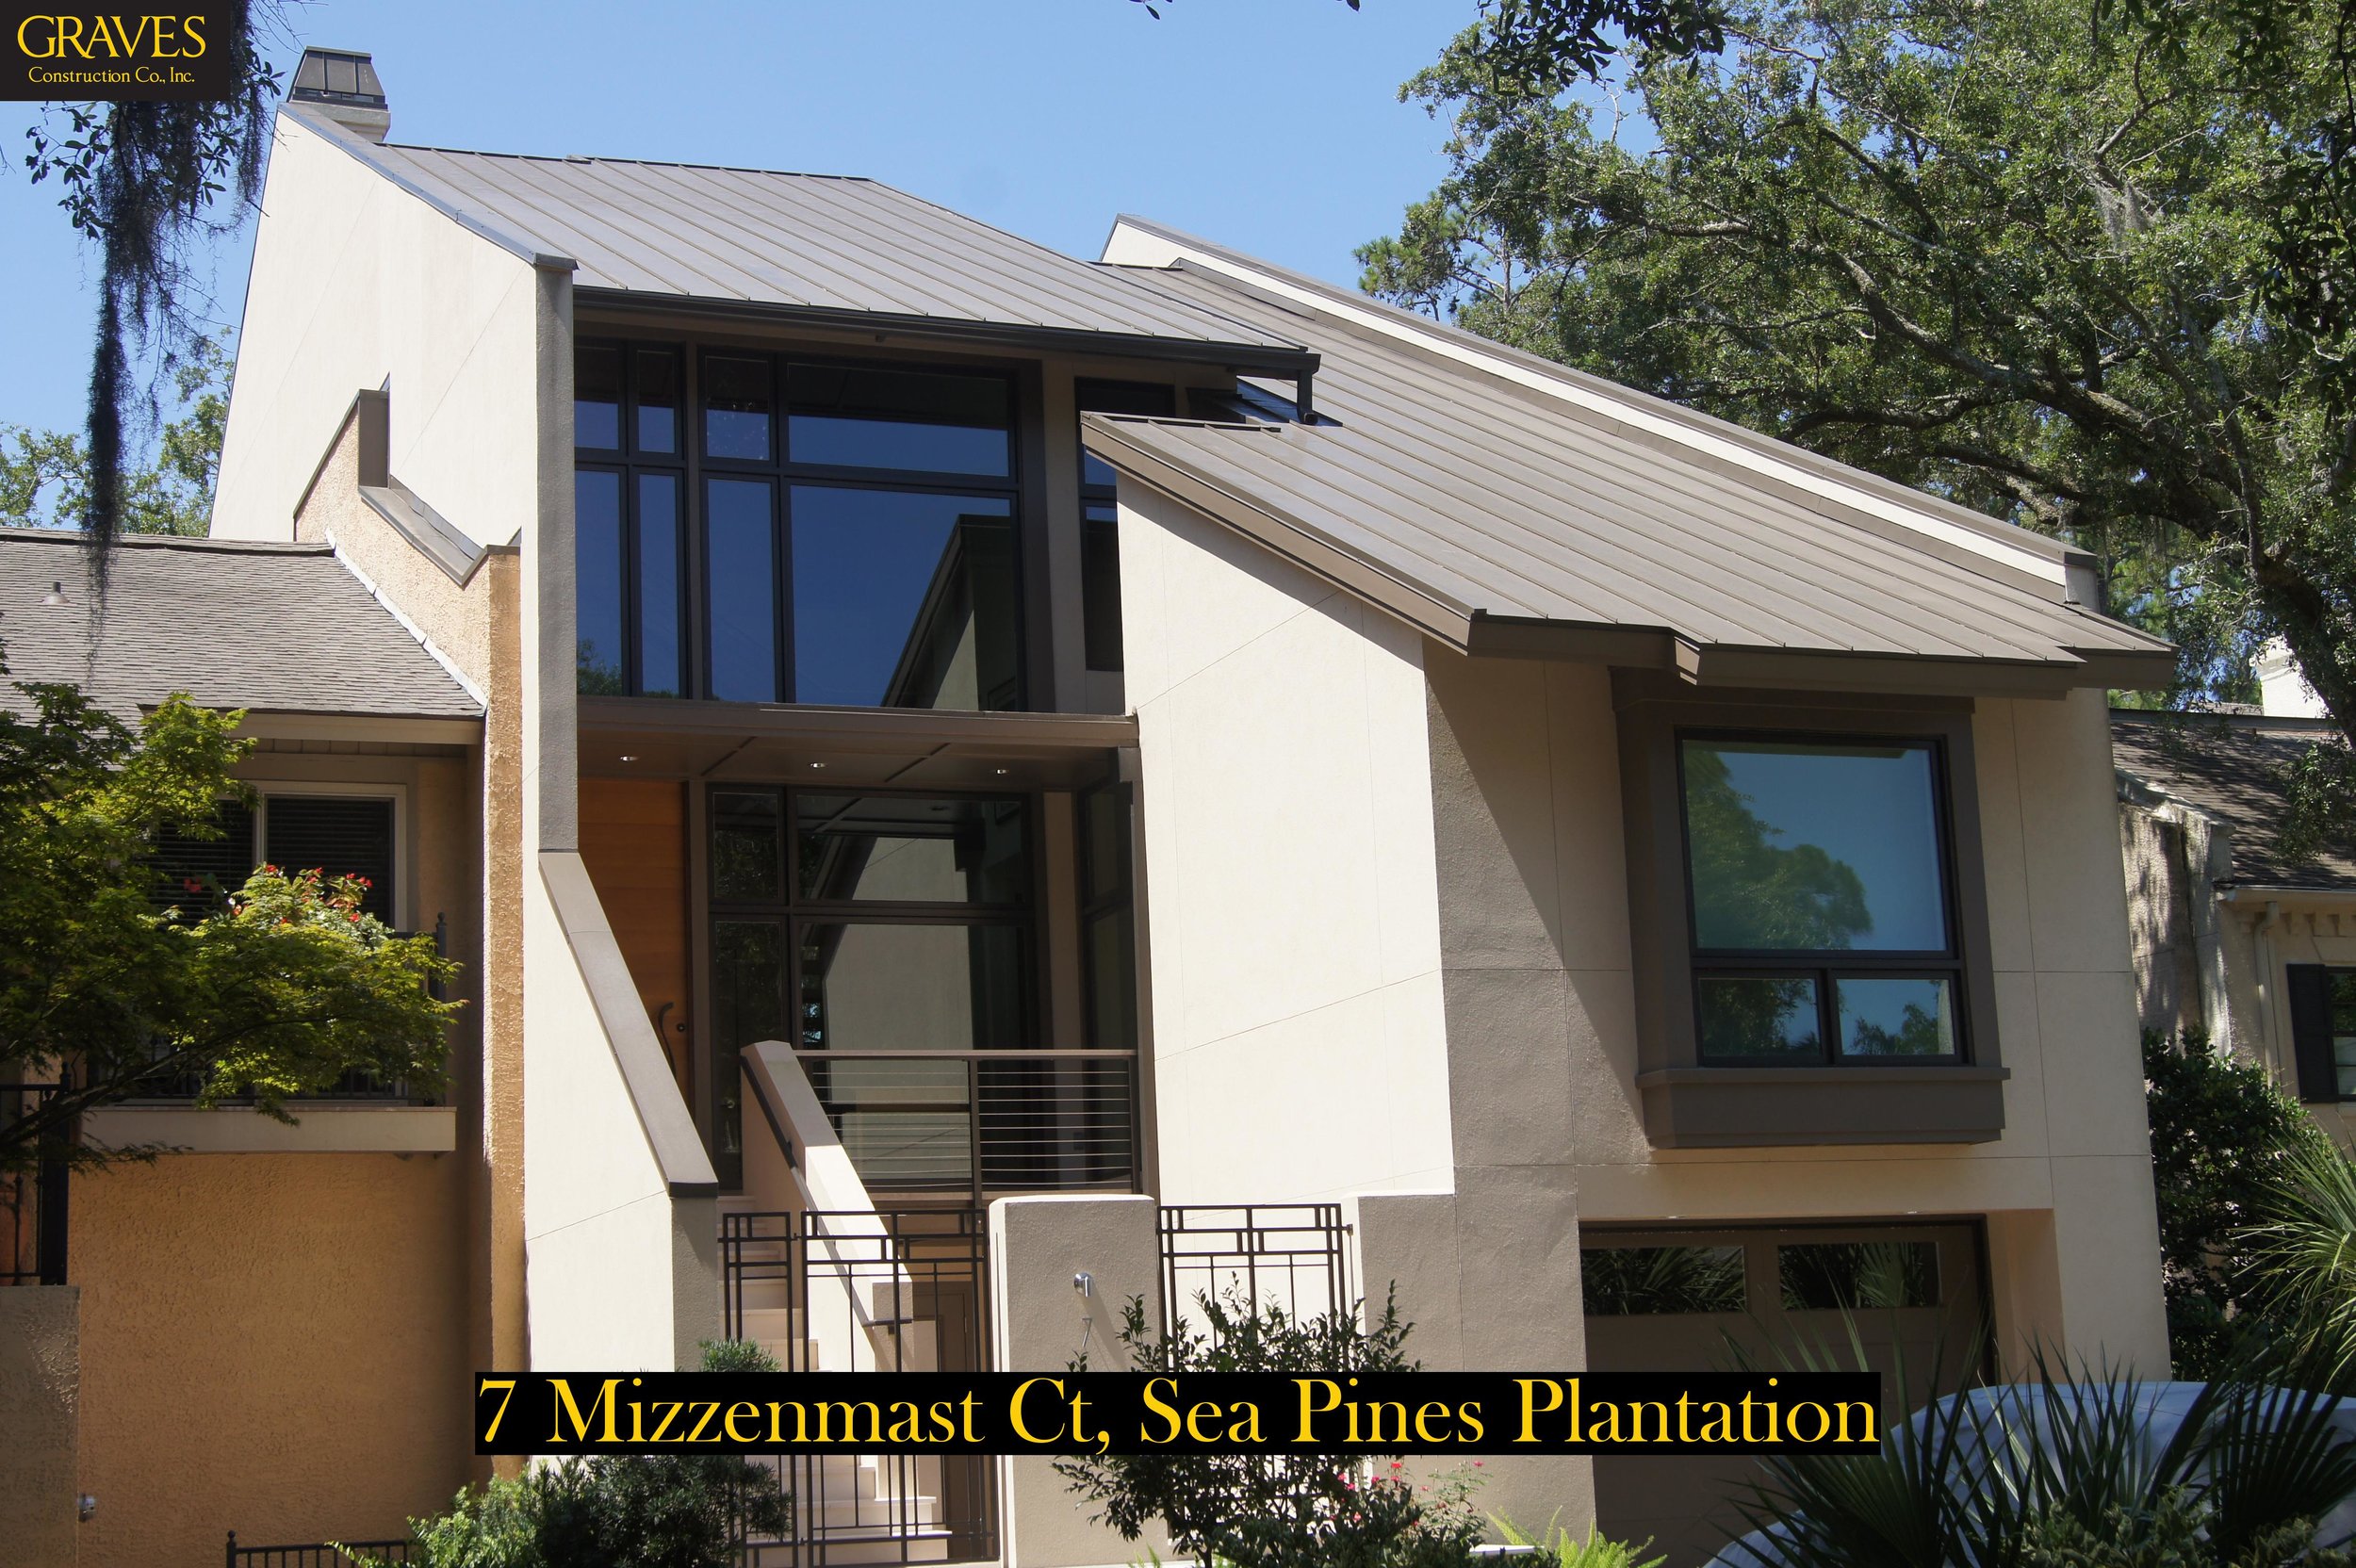 7 Mizzenmast Ct. - Sea Pines Plantation